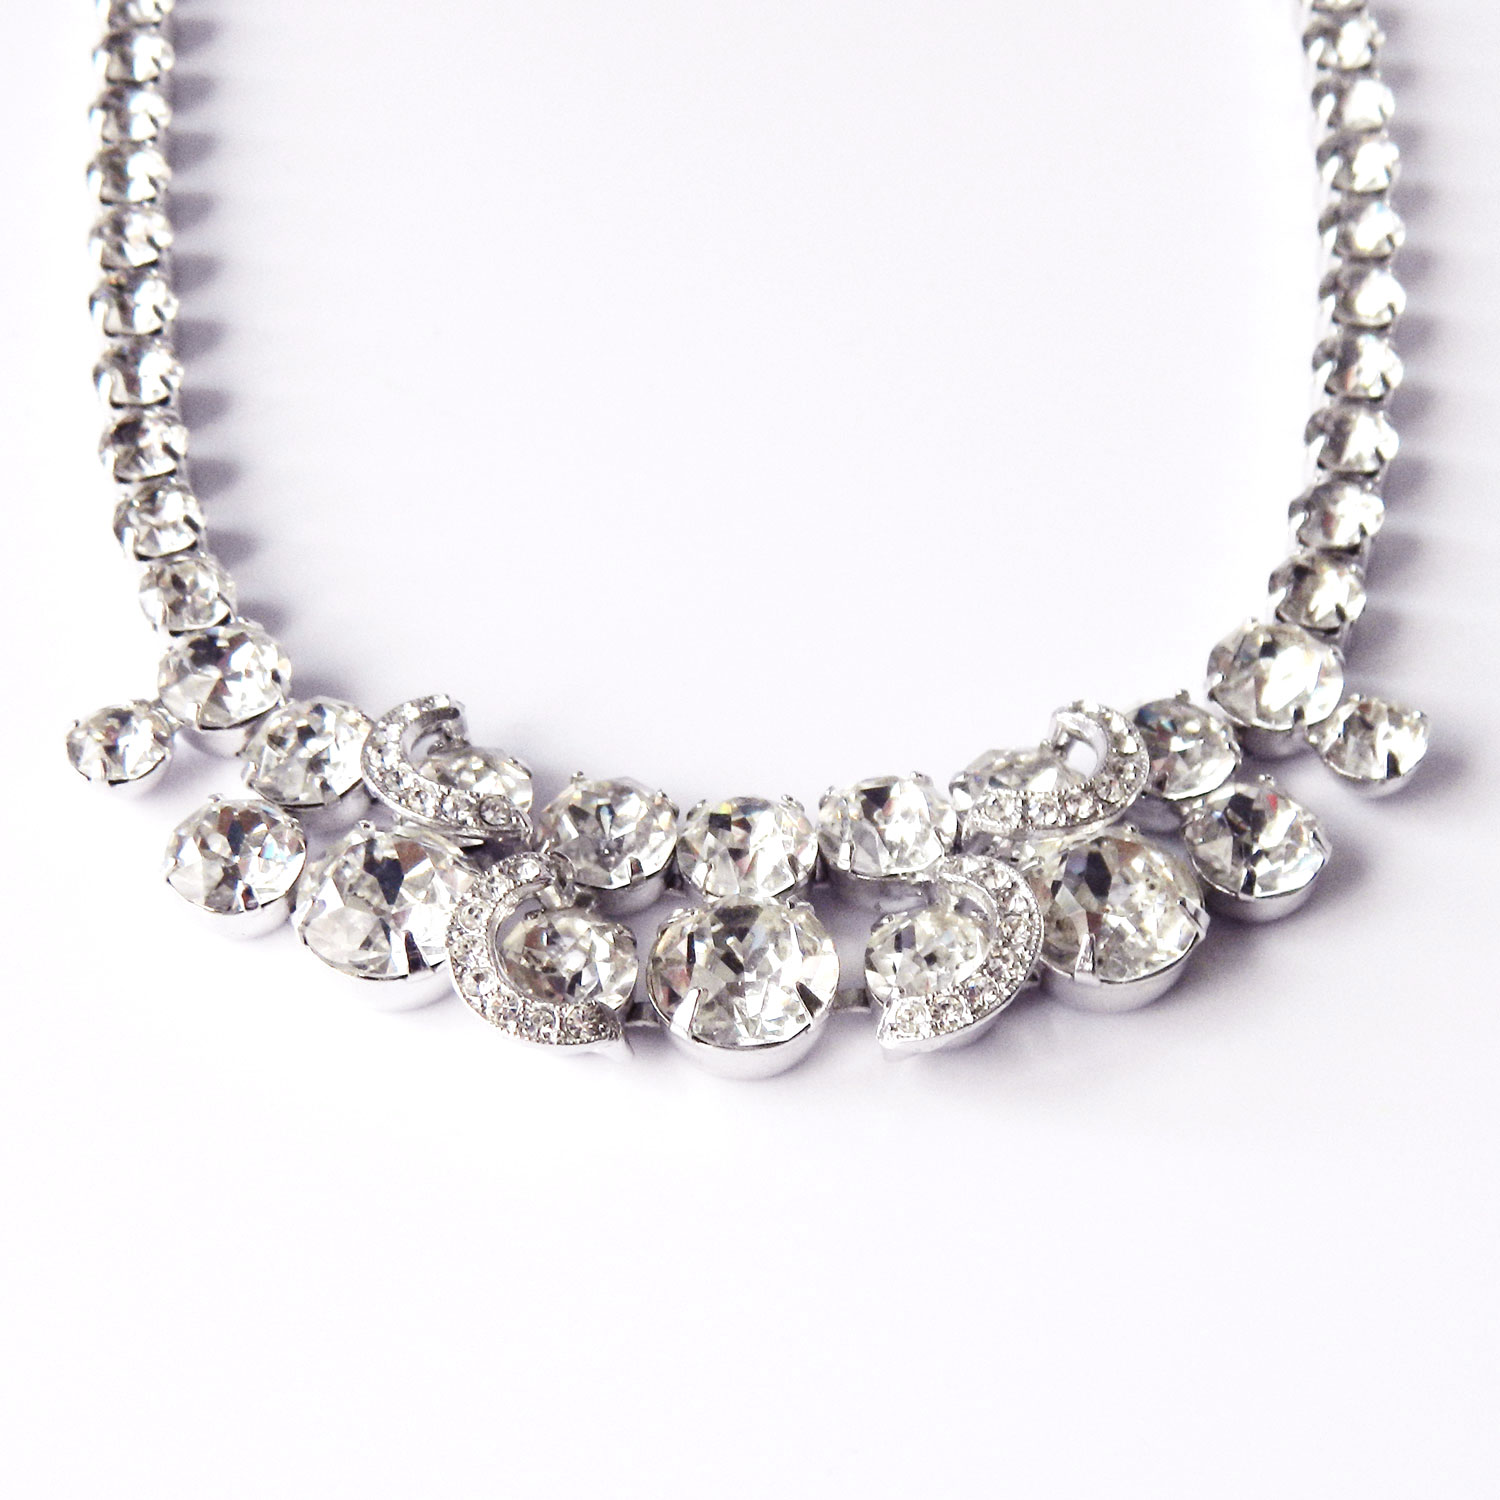 Eisenberg necklace